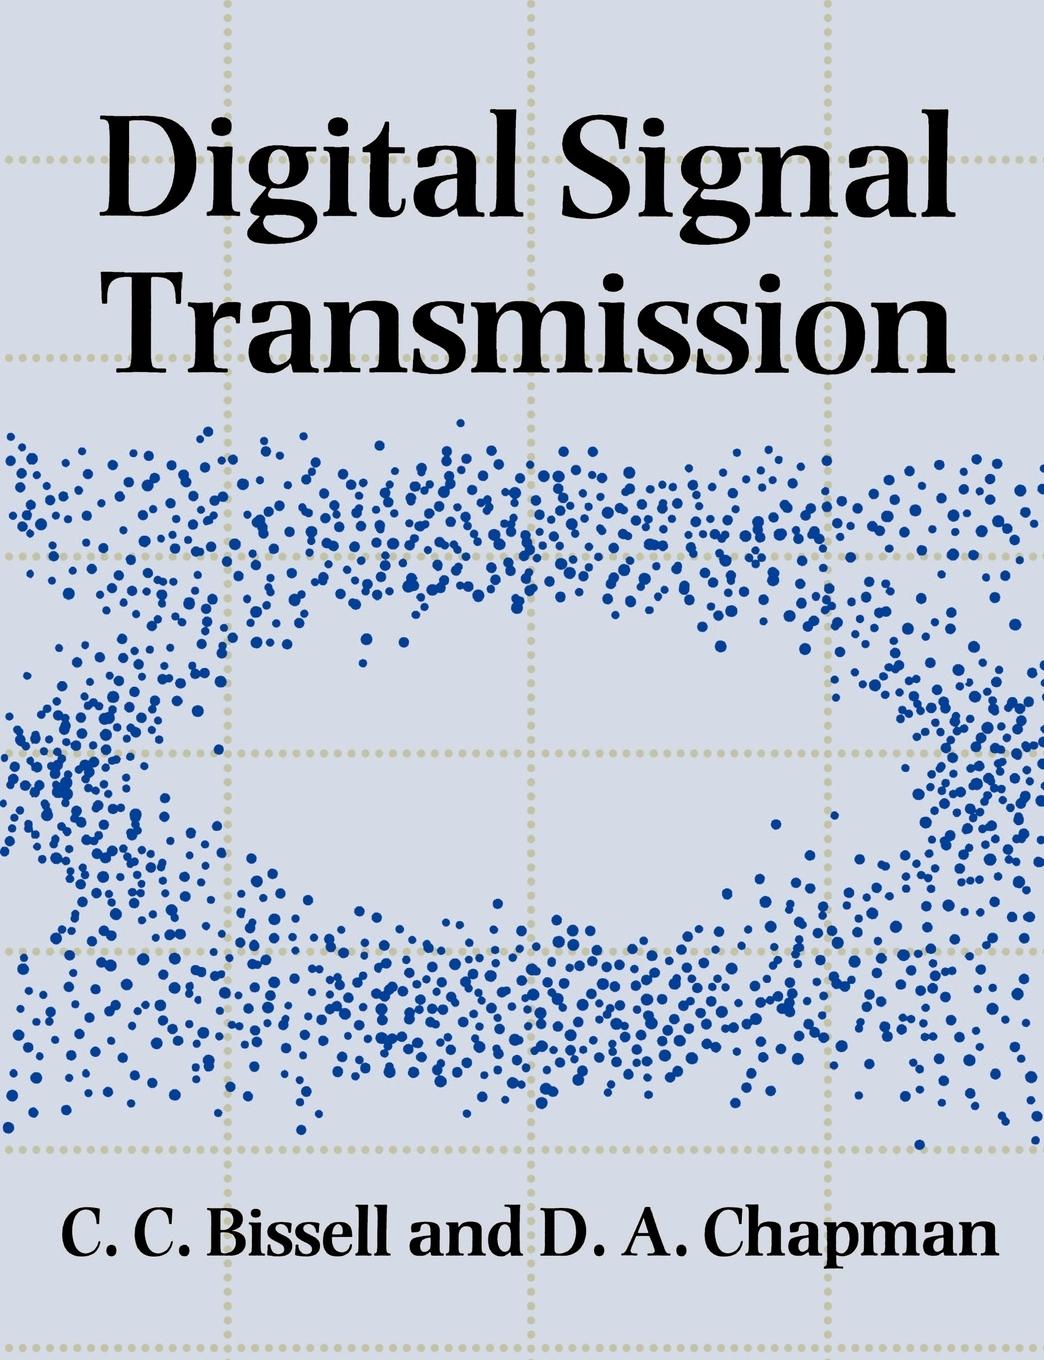 Digital Signal Transmission - Bissell, C. C. Chapman, D. A. Bissell, Chris